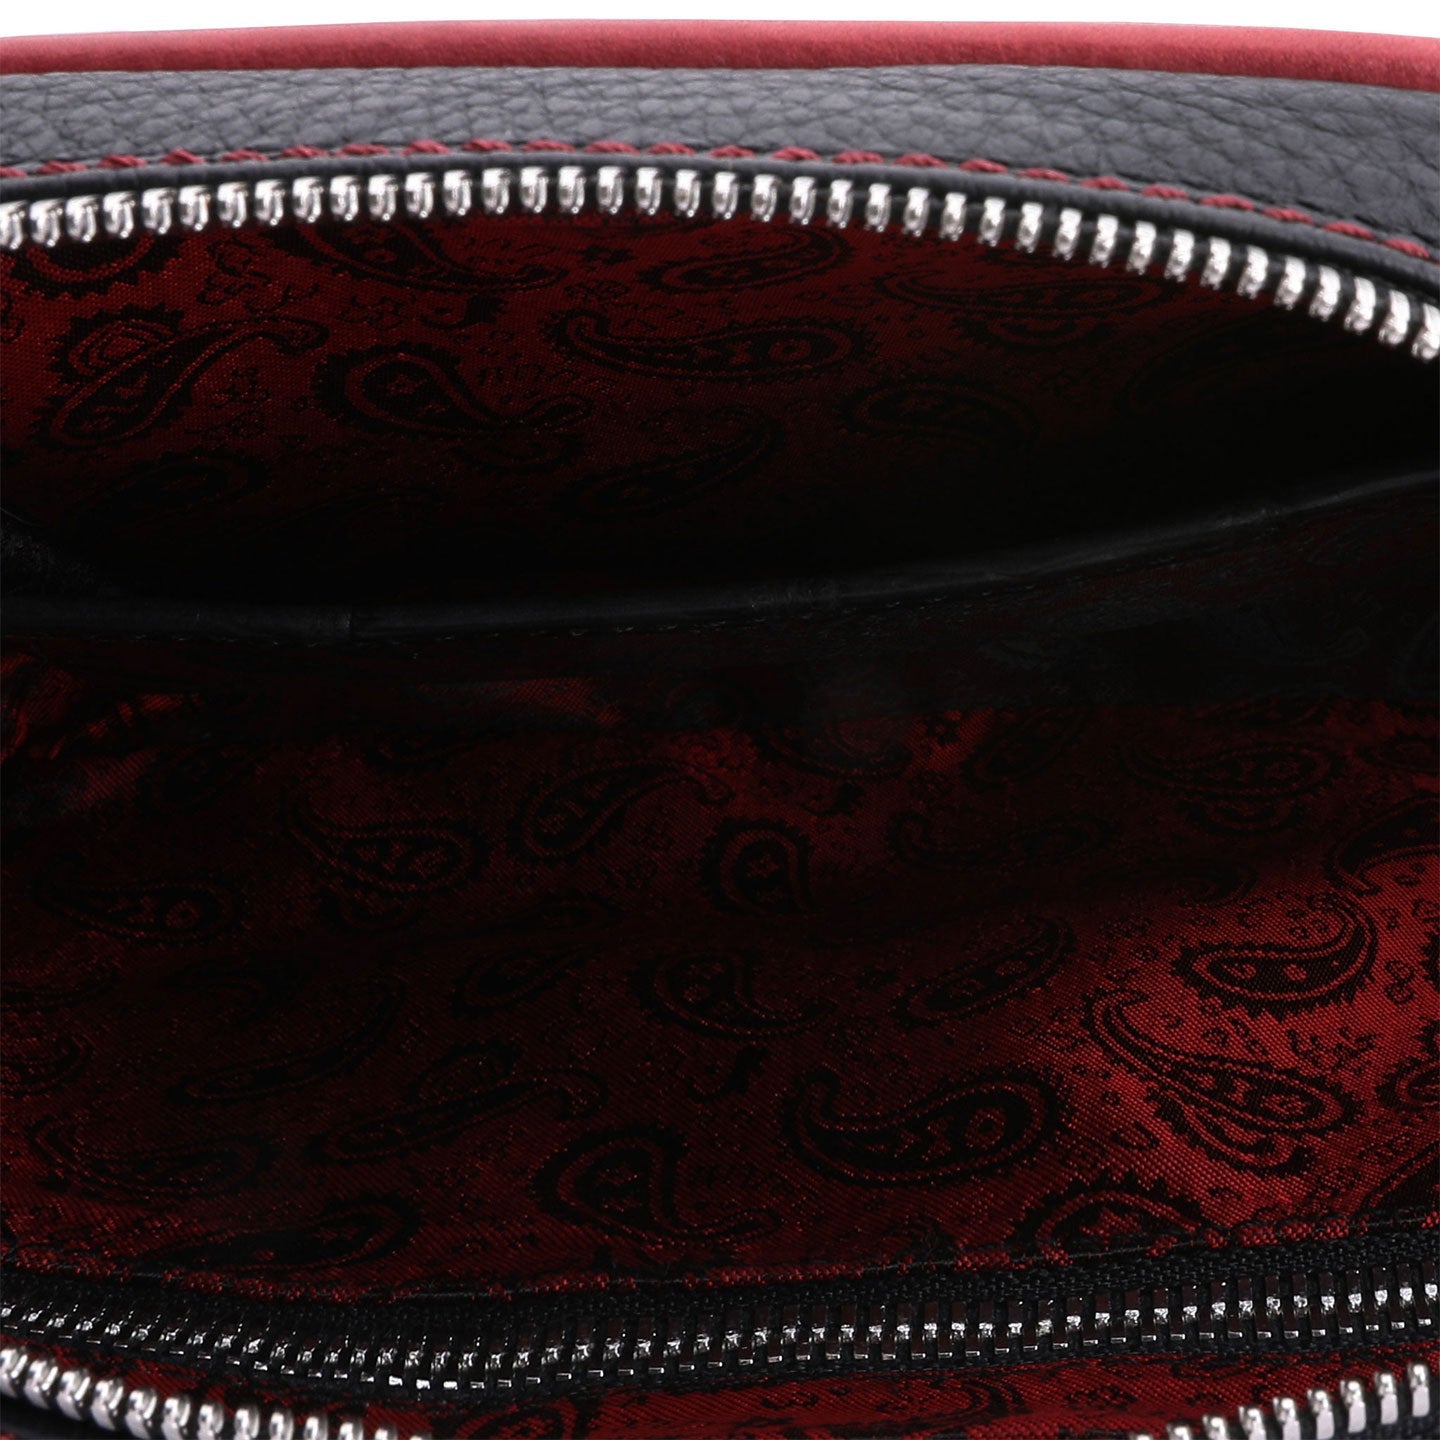 Black bag with red details